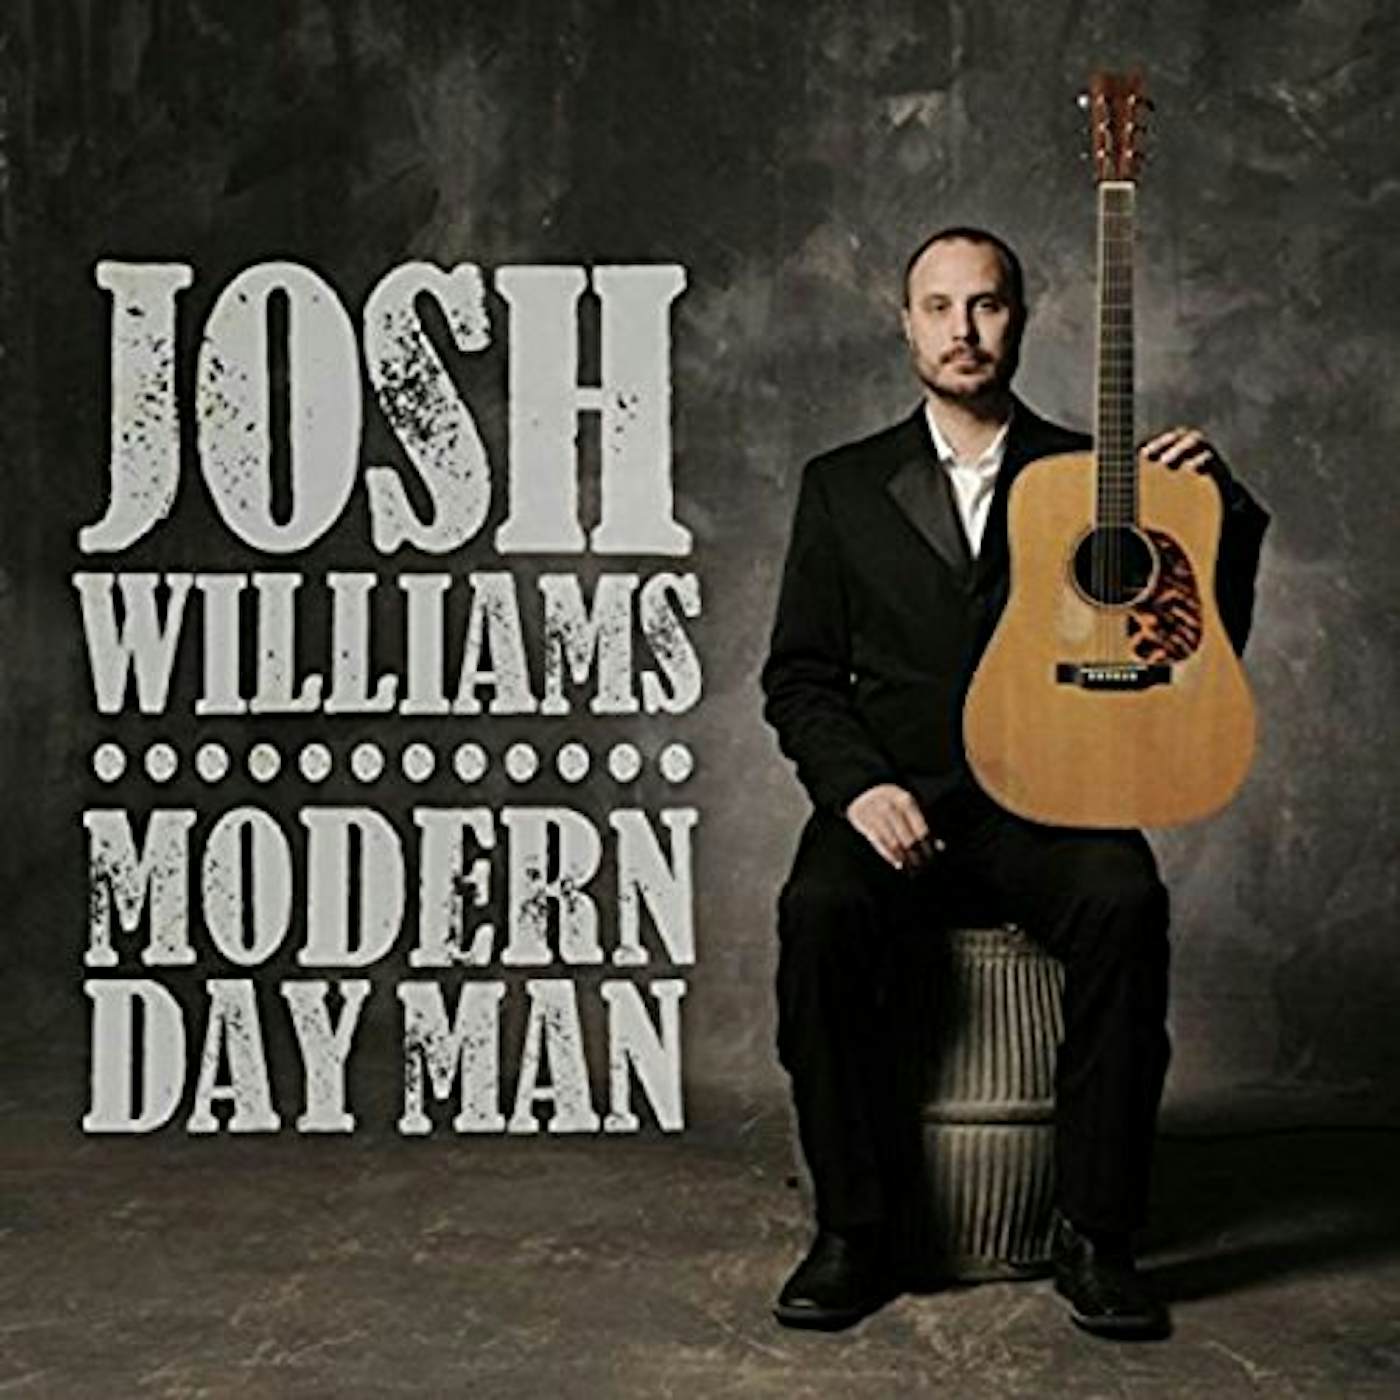 Josh Williams MODERN DAY MAN CD